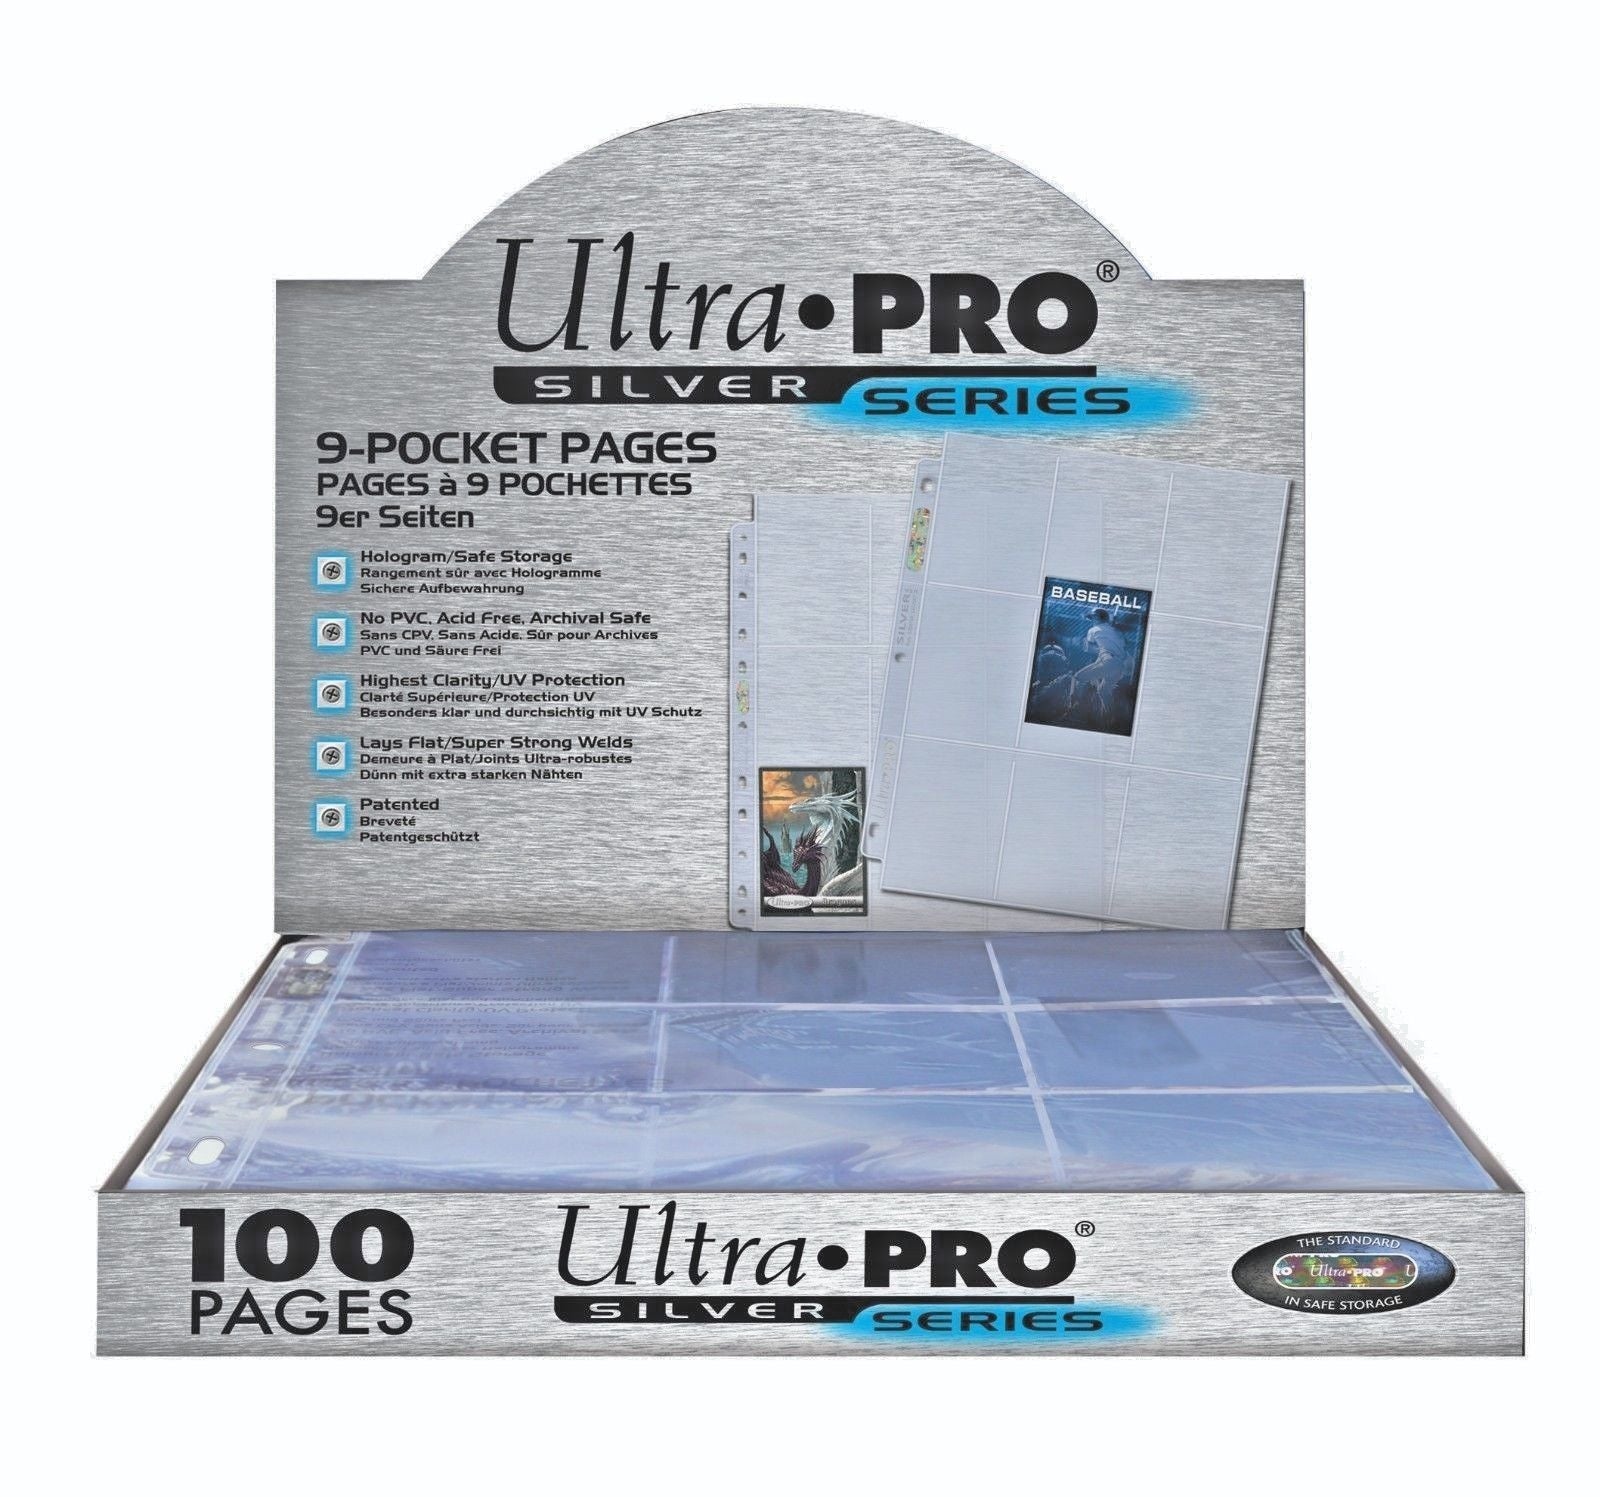 9-Pocket Pages Silver Series UltraPro - Hologram